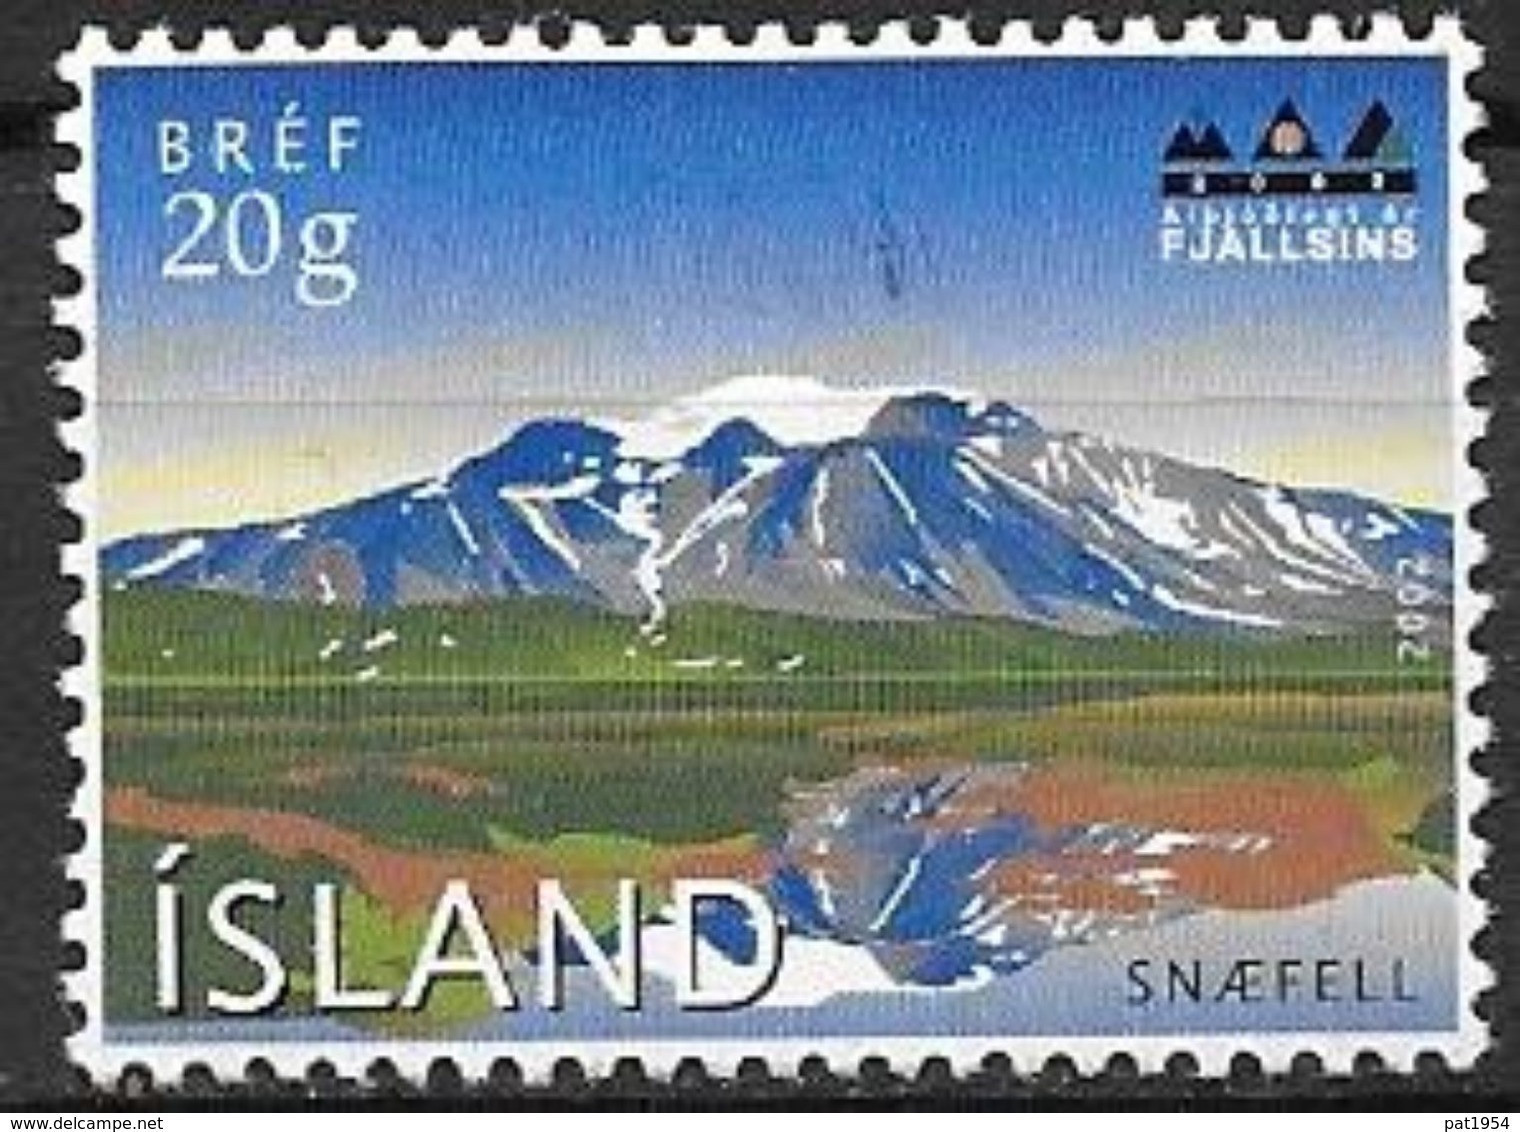 Islande 2002 N°932 Neuf** Année De La Montagne Snaefel - Neufs